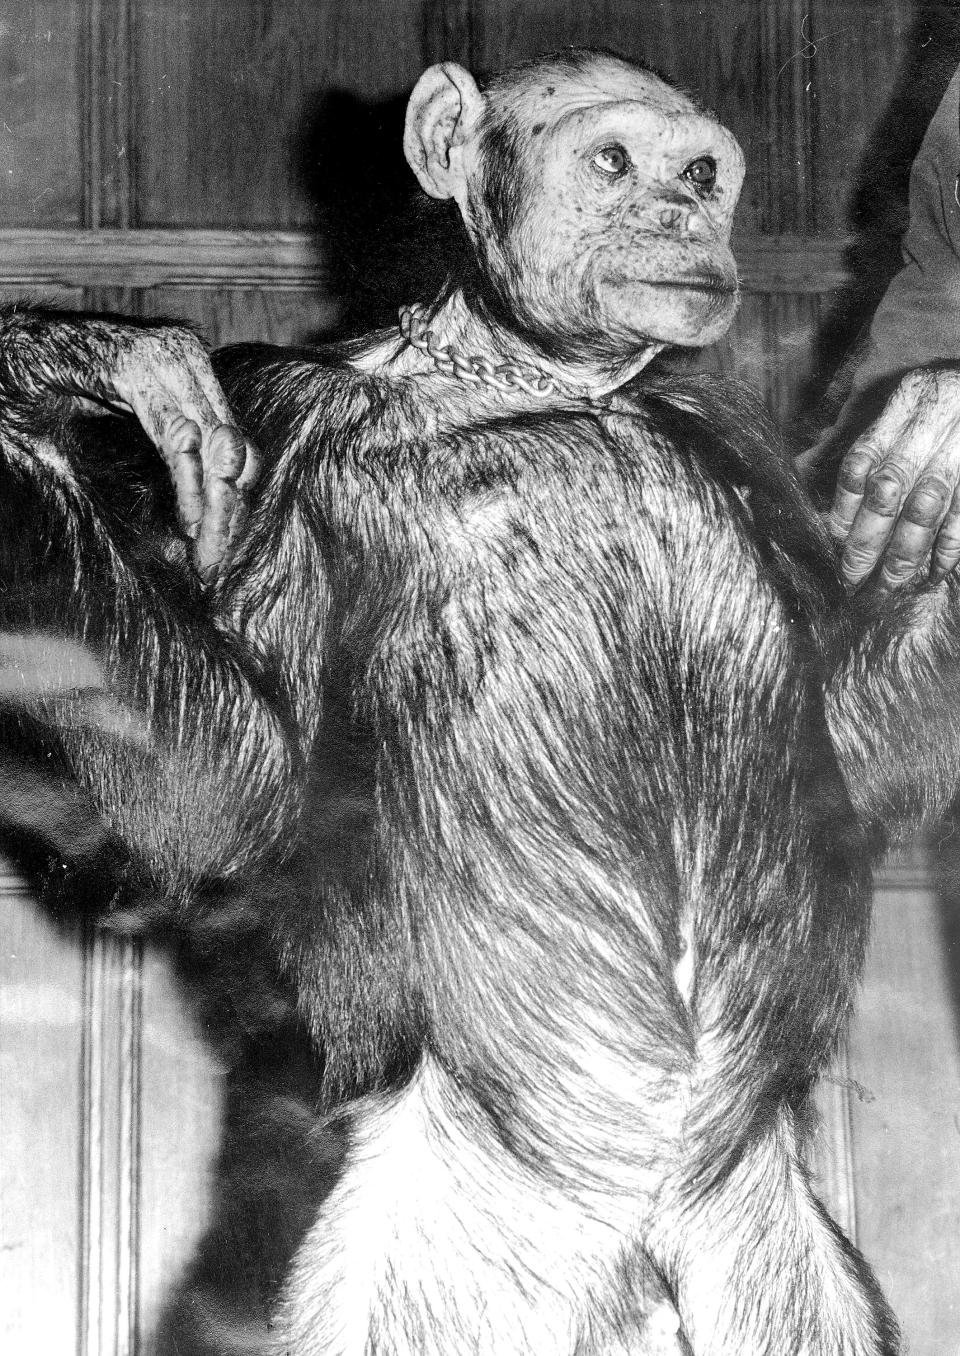 Оливер-гибрид человека и шимпанзе